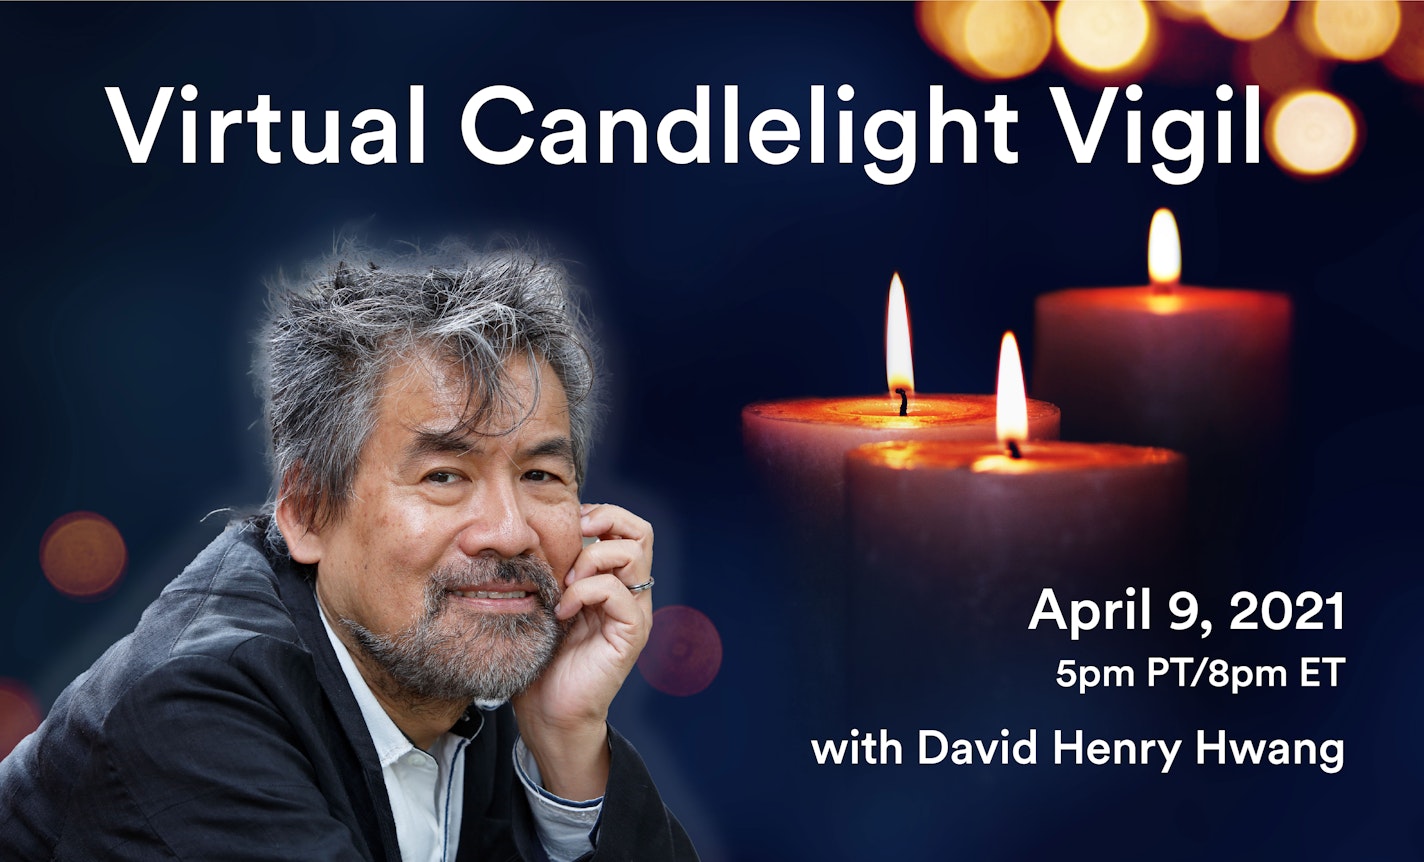 Reimagine Candlelight Vigil with David Henry Hwang